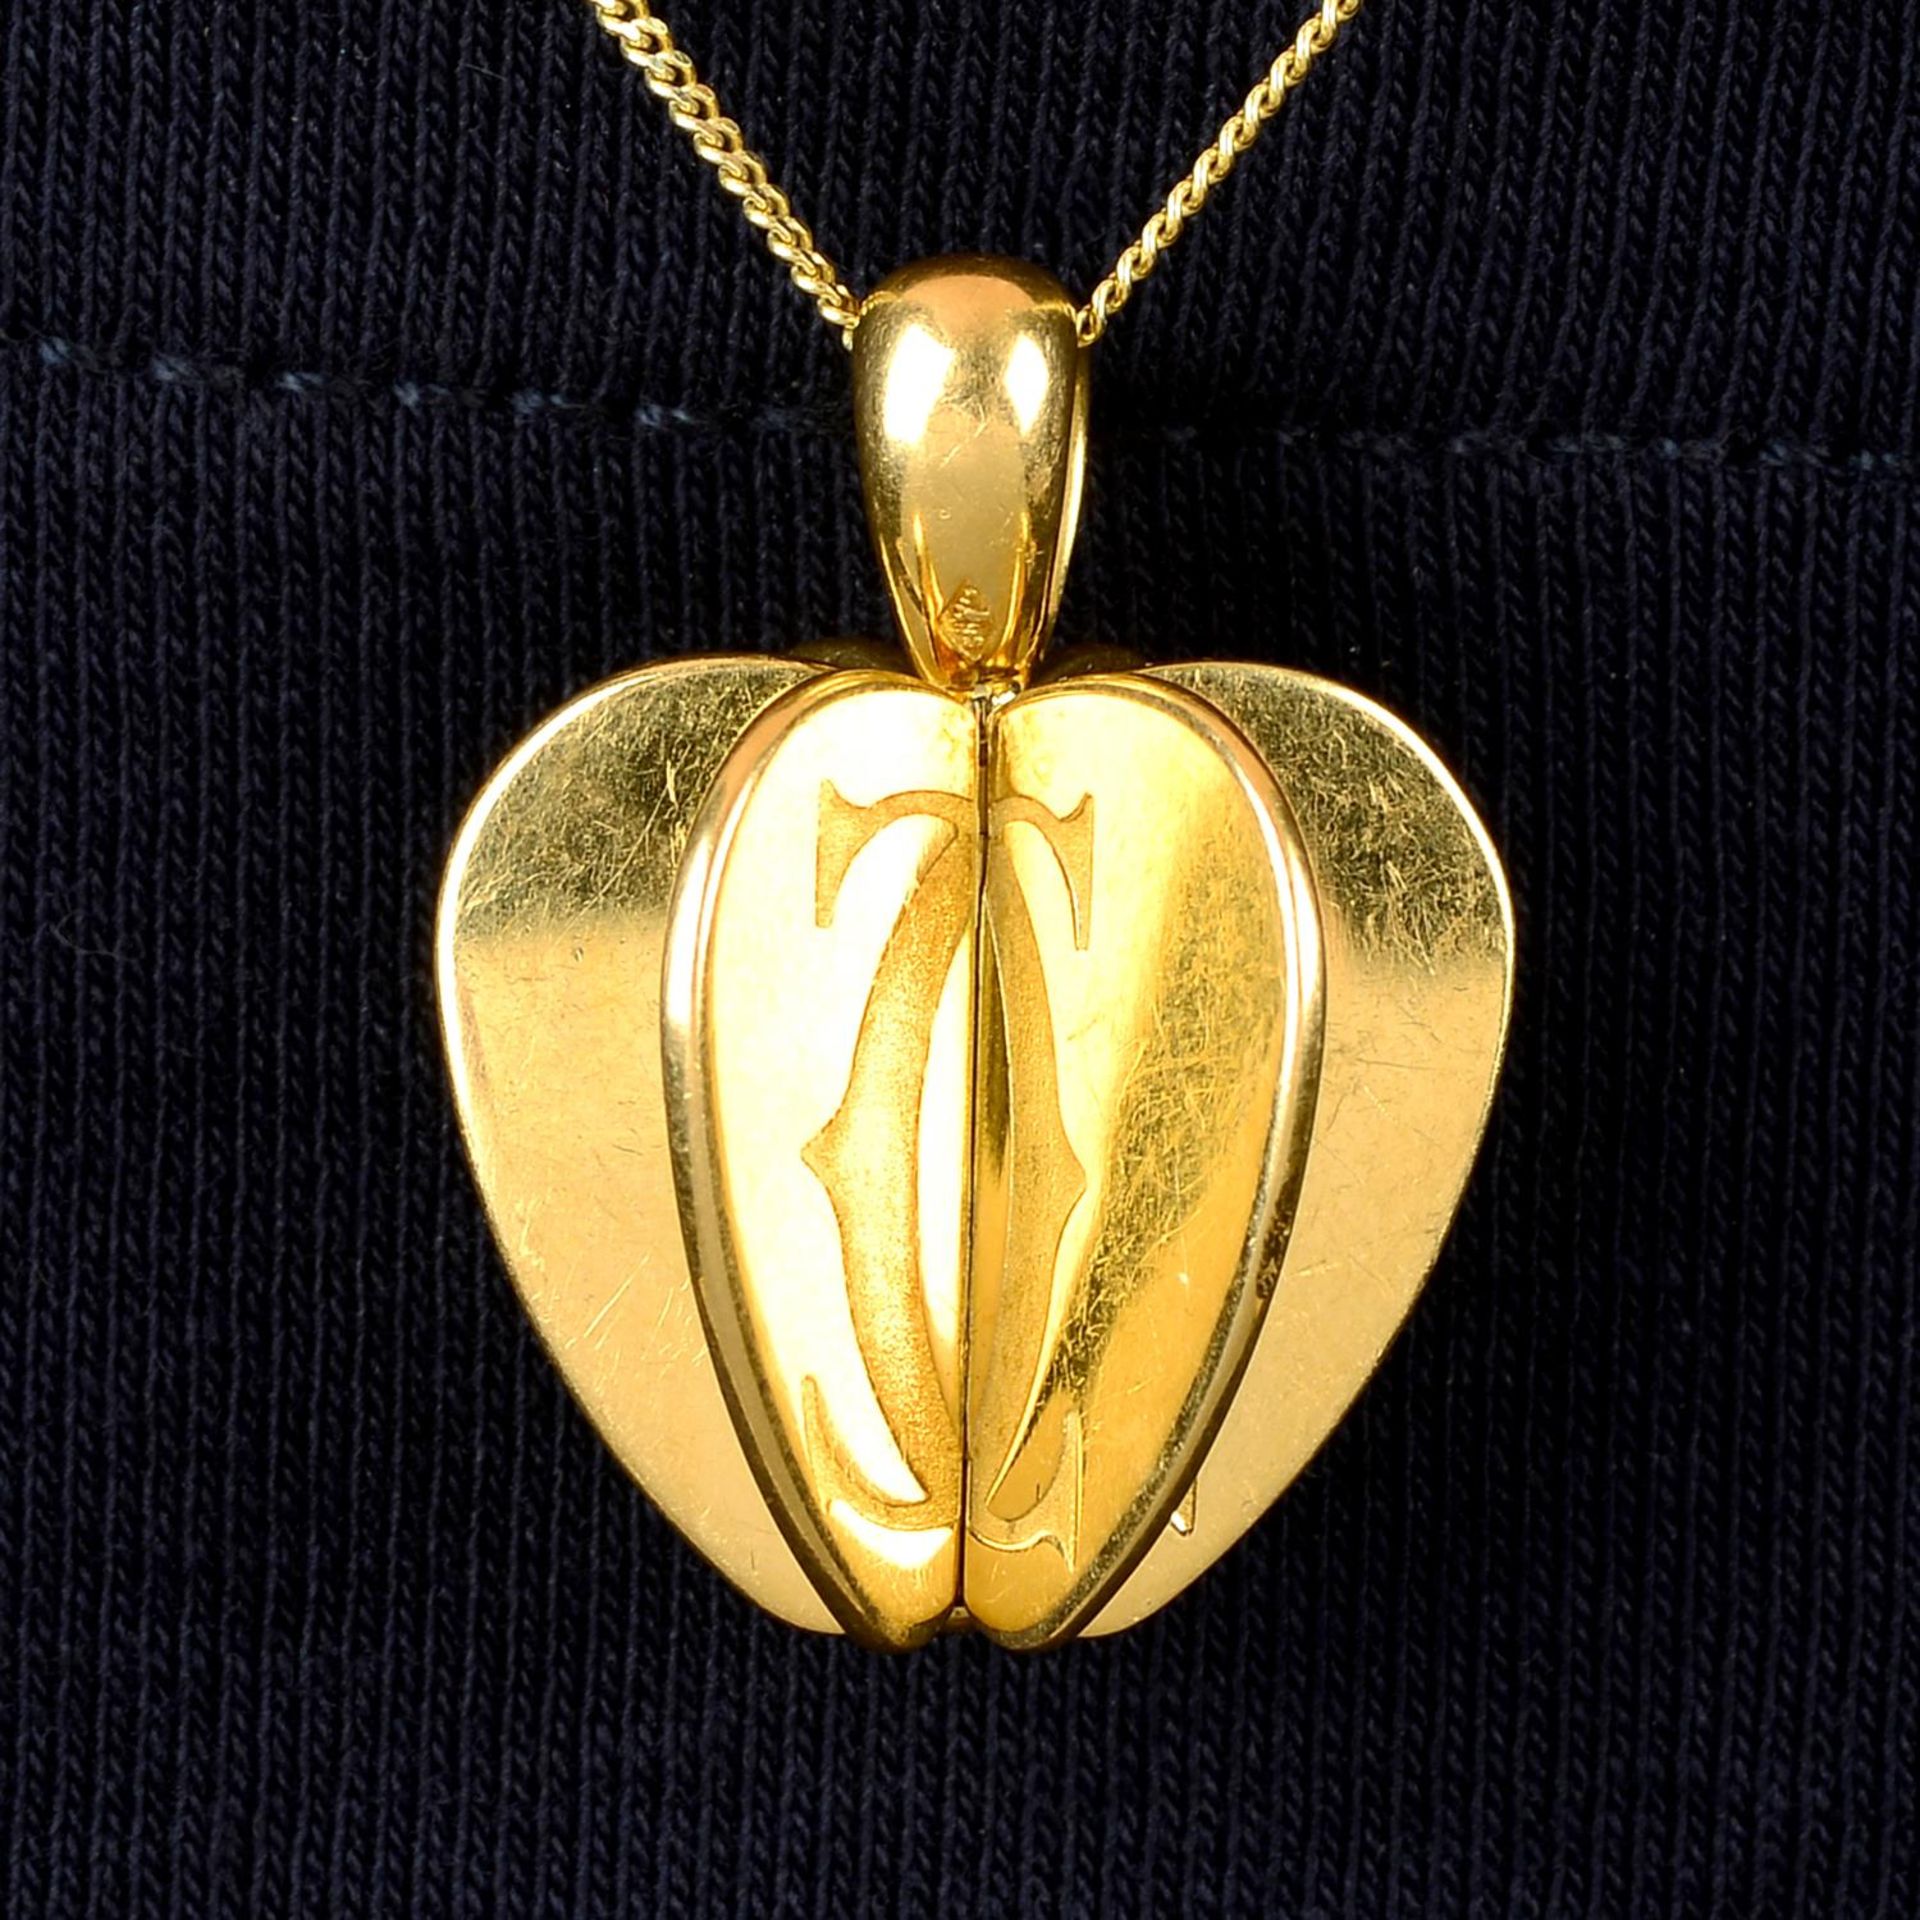 An Apple pendant, by Cartier.